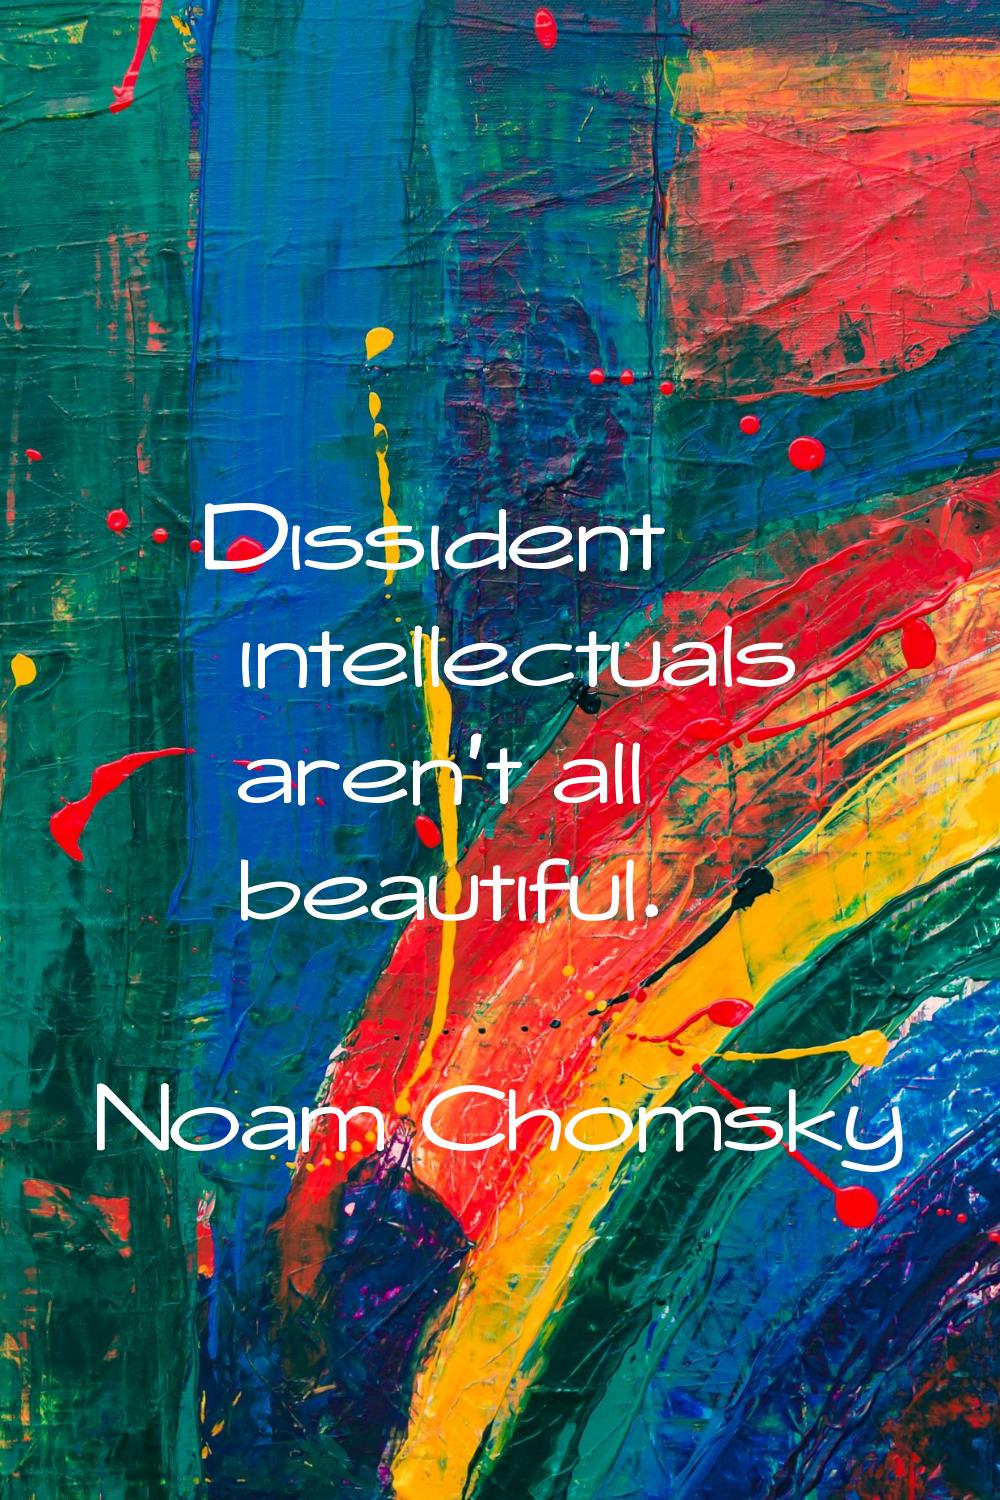 Dissident intellectuals aren't all beautiful.